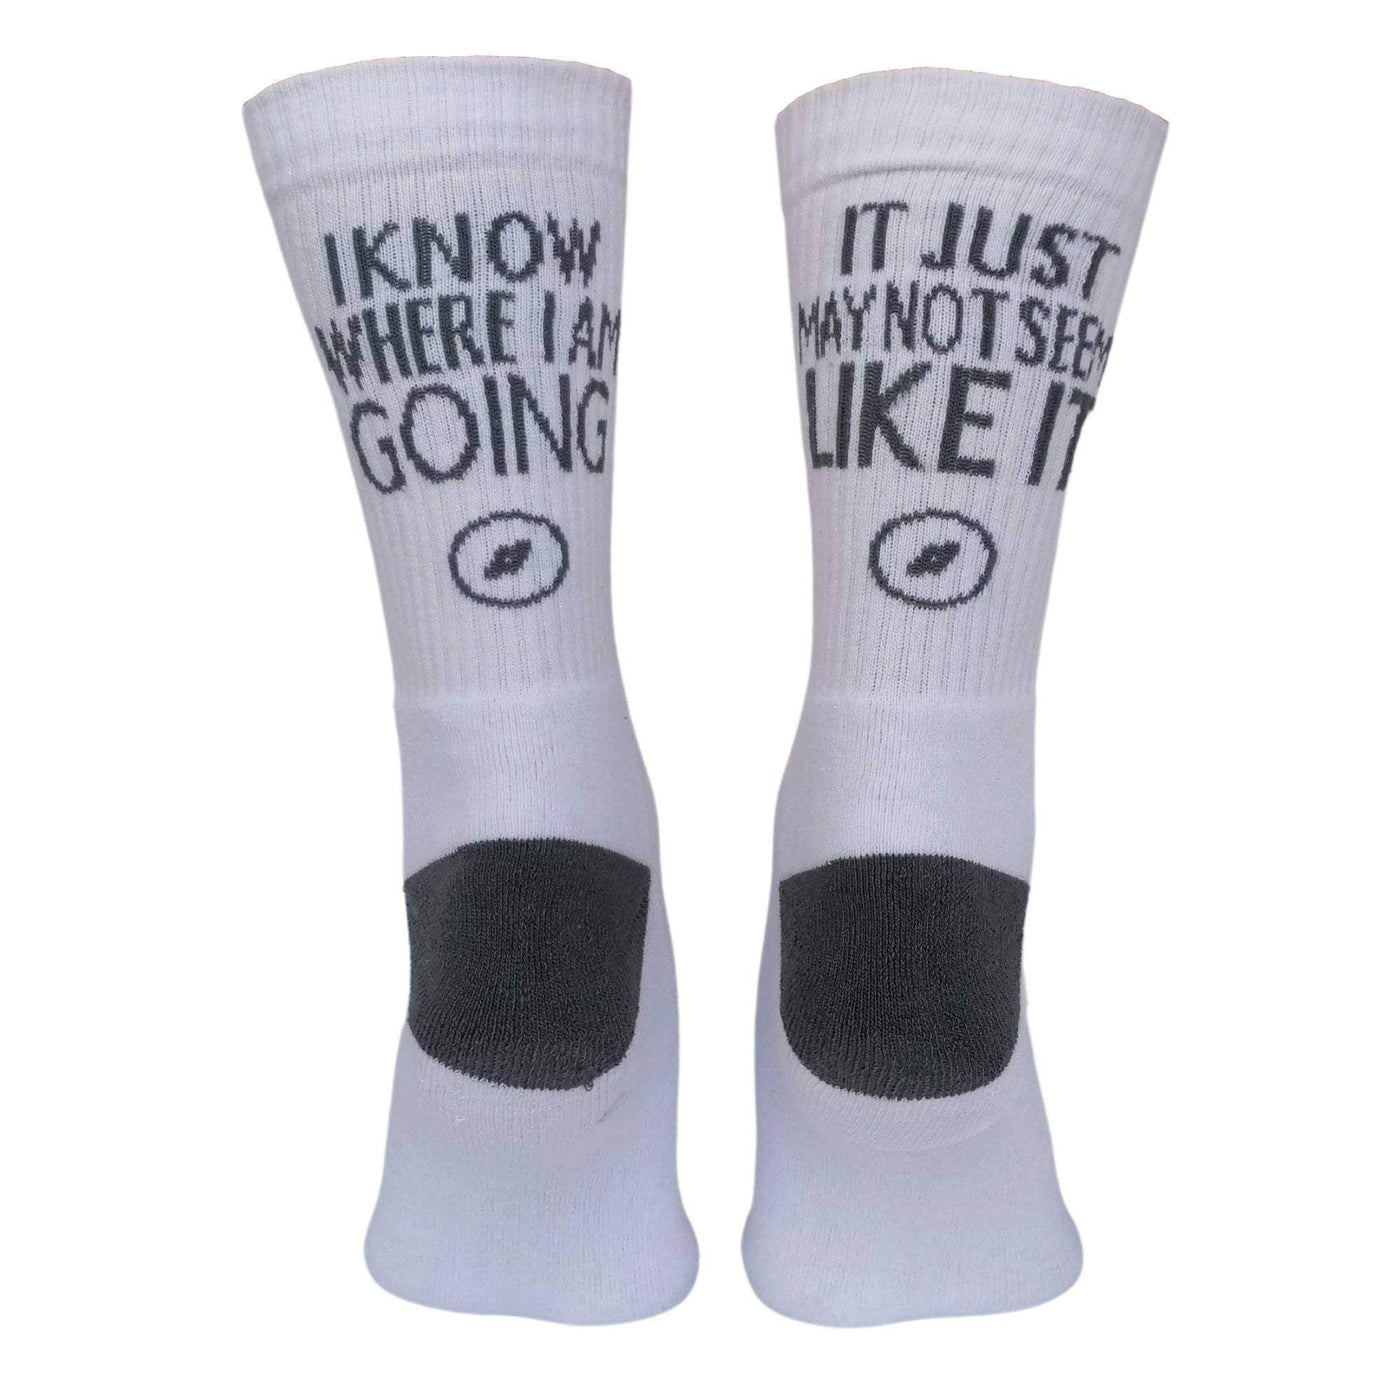 I know where I'm going… - Socks-Worry Less Design-Cycling,Cycling-Gift,Running,Running-Gift,Socks,Walking-Gift